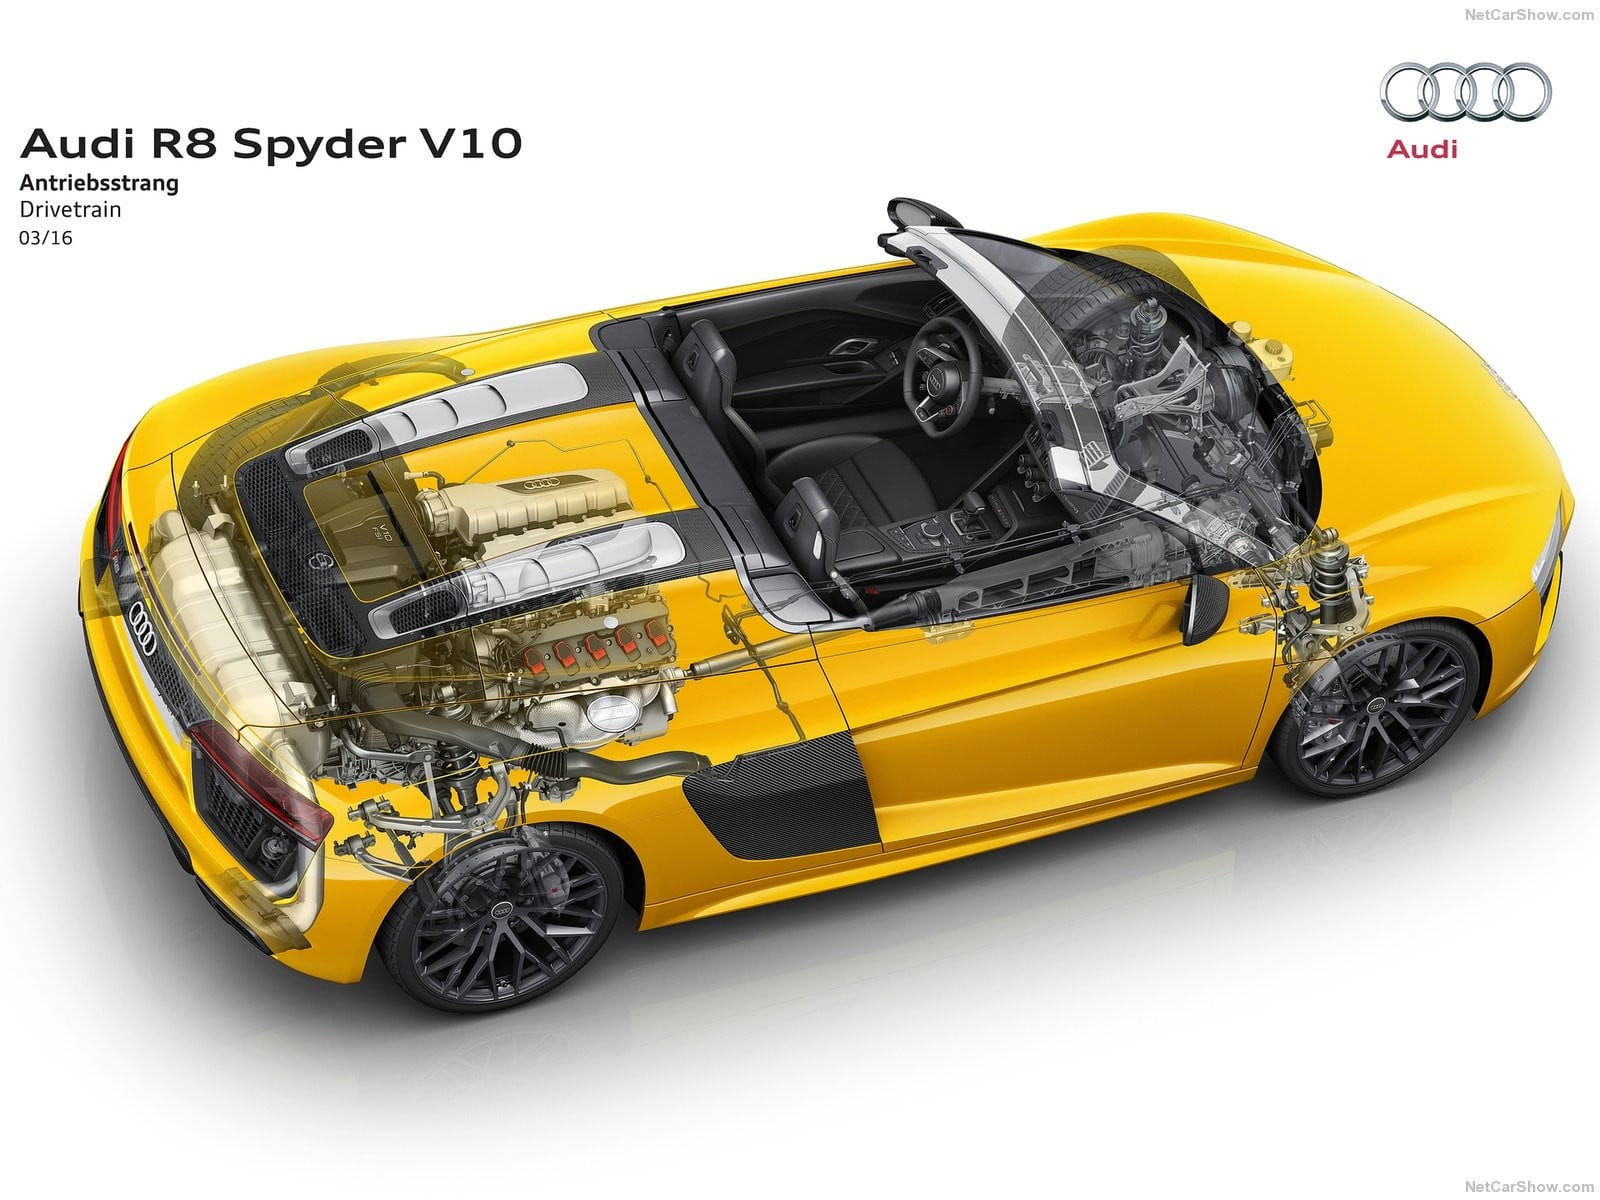 Audi R8 Spyder, car, transportation, mode of transportation